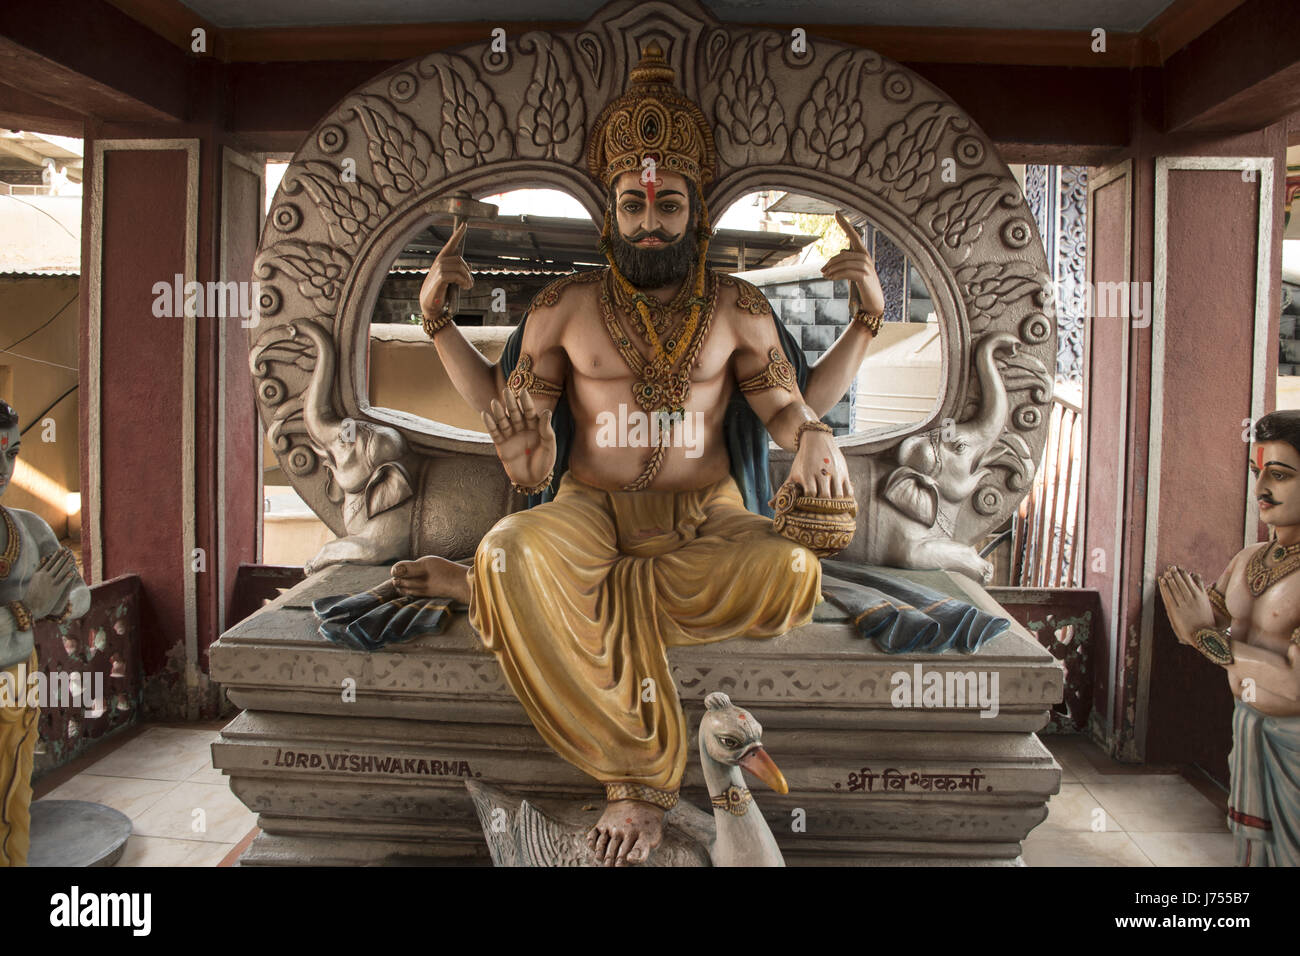 Lord vishwakarma hi-res stock photography and images - Alamy